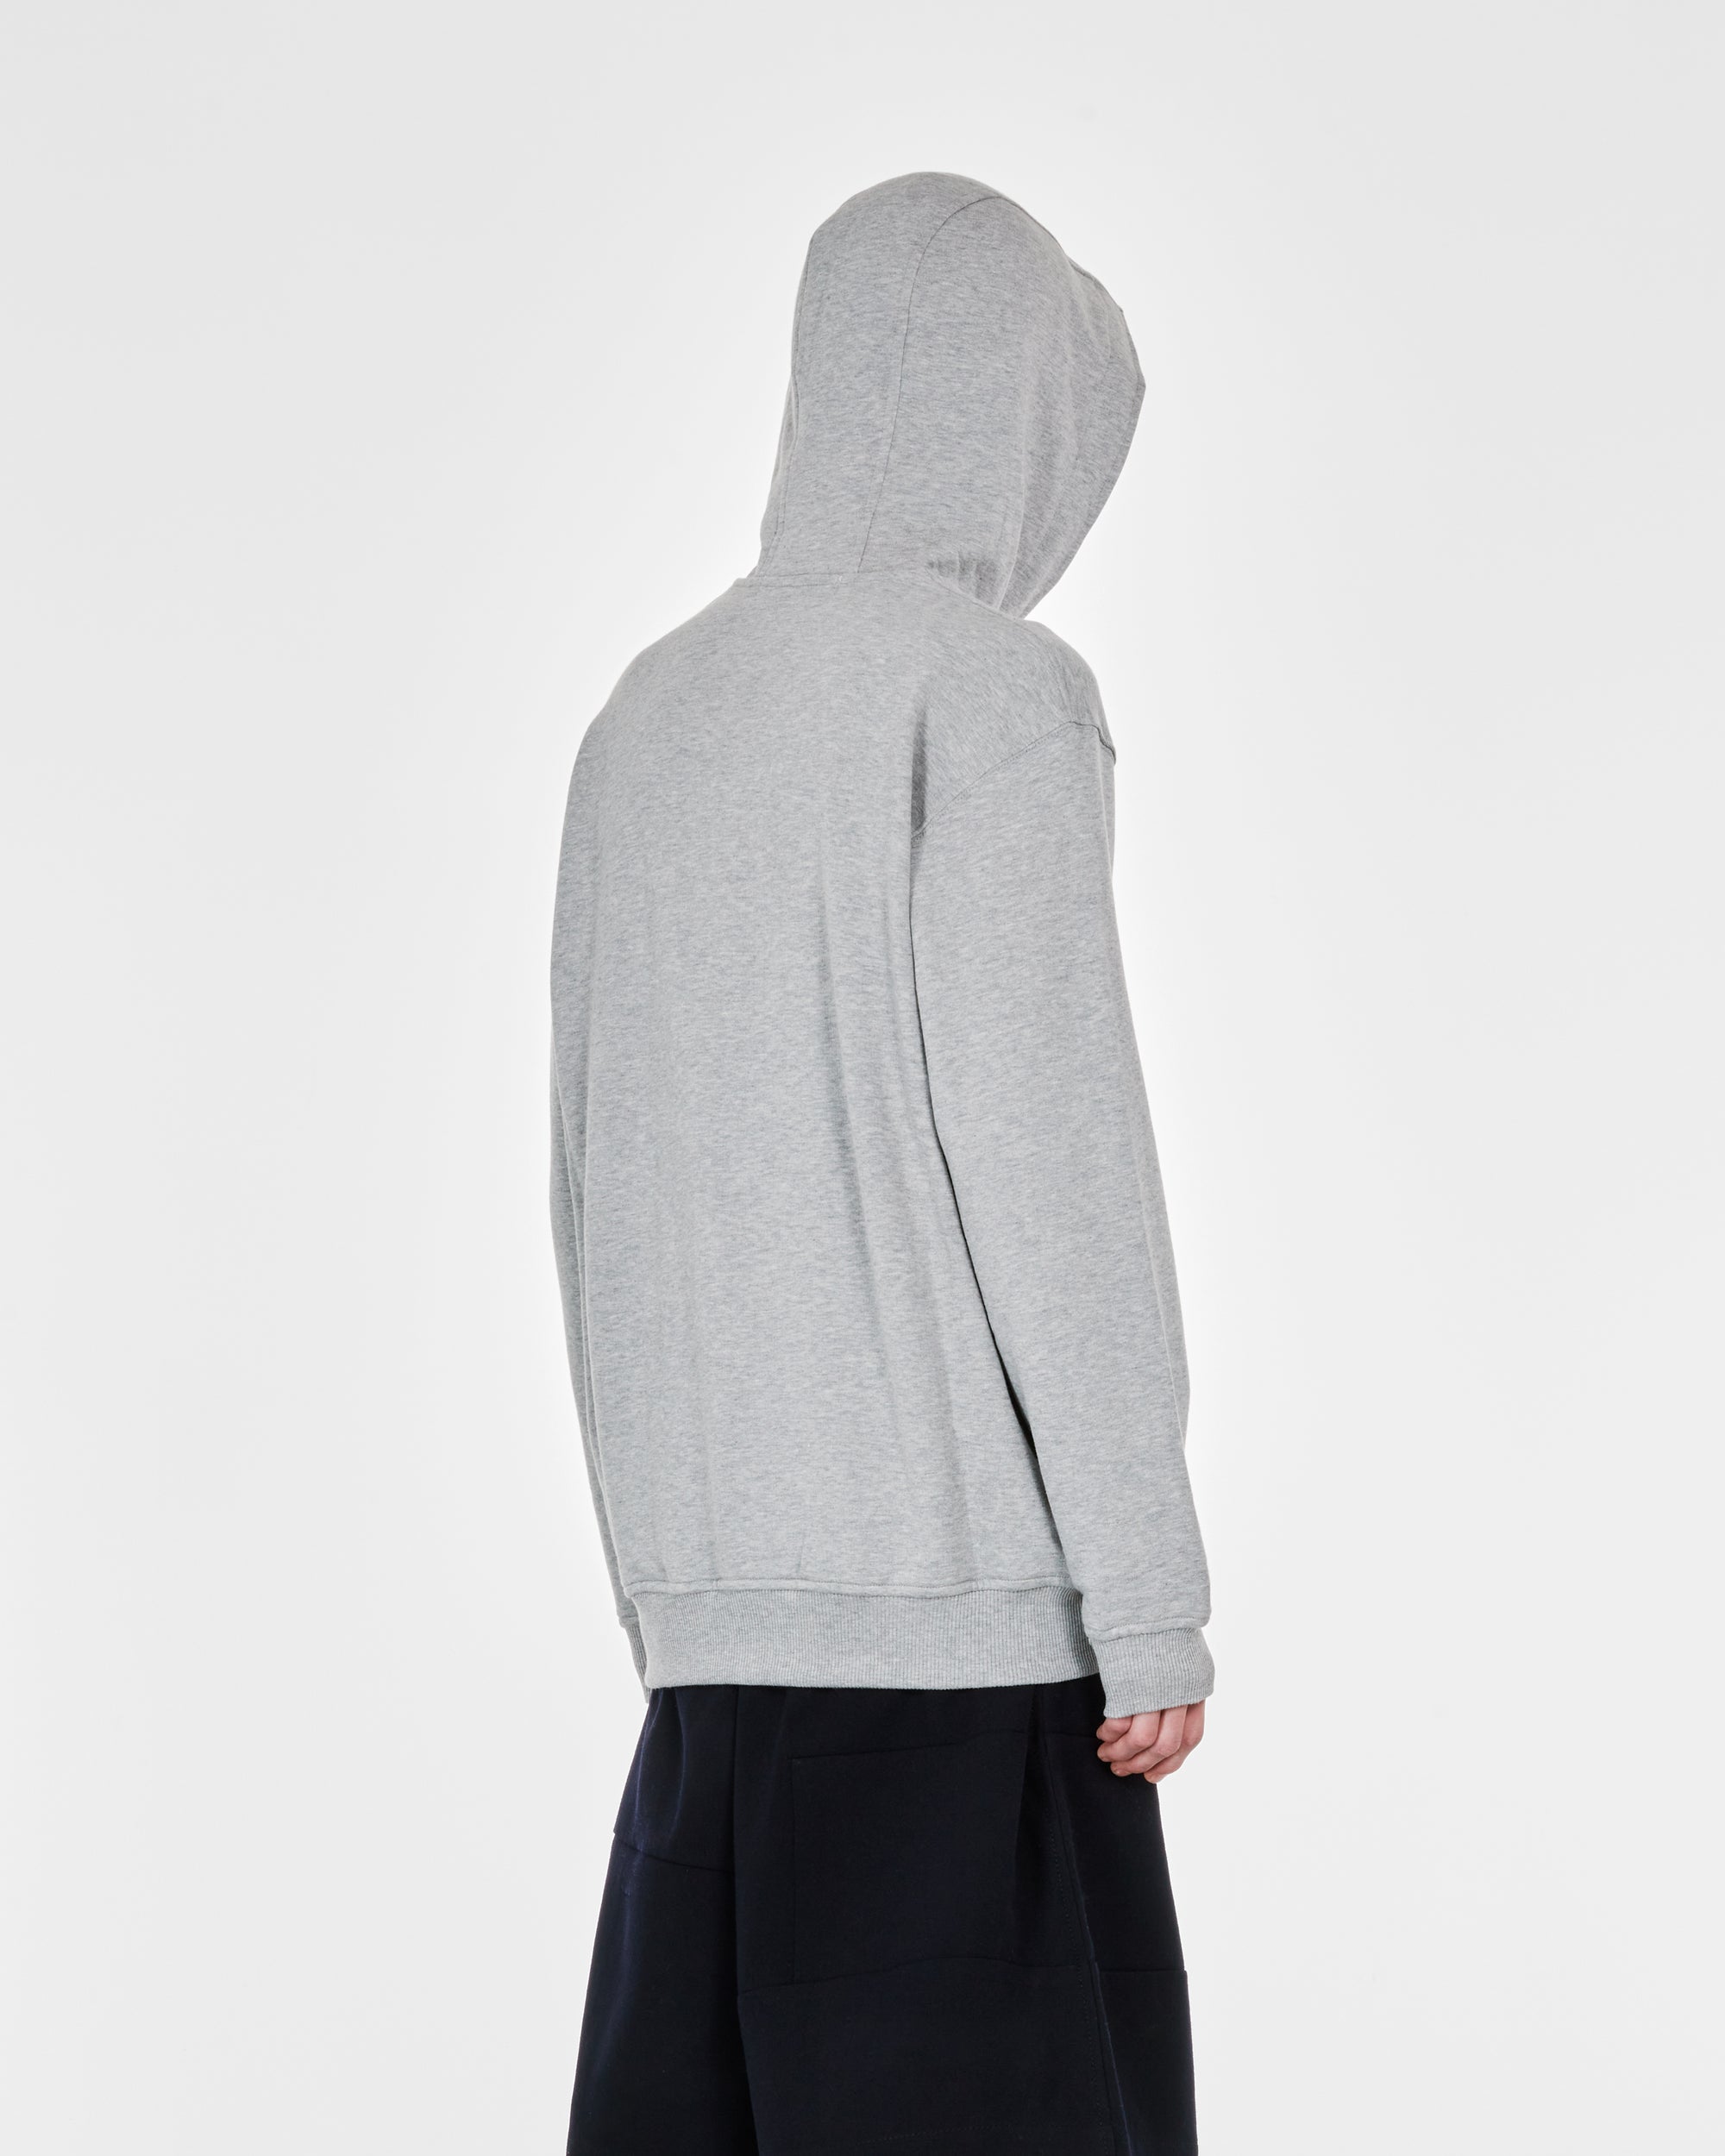 CDG Shirt - Andy Warhol Men's Hooded Sweatshirt - (Grey/Print J) view 4